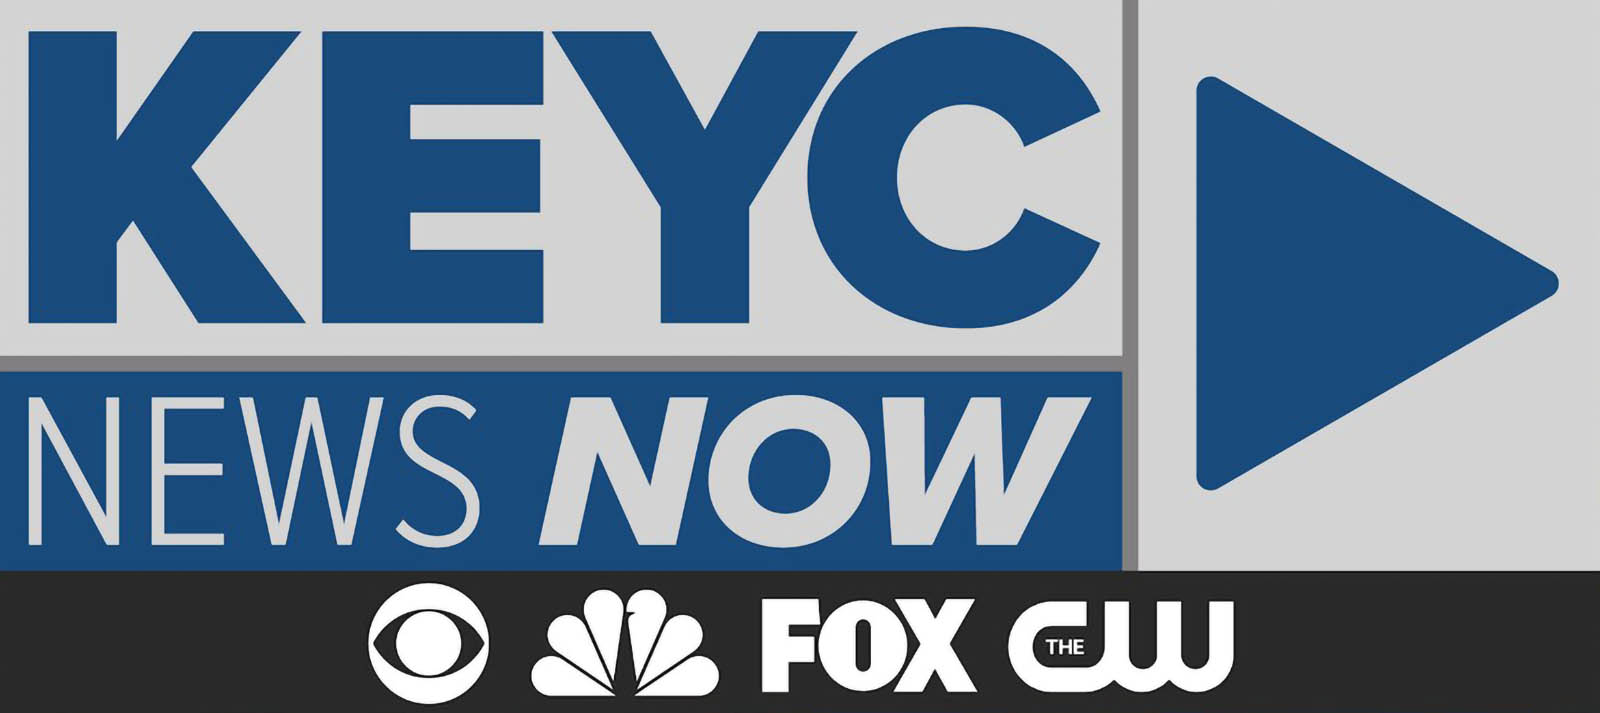 KEYC News Logo